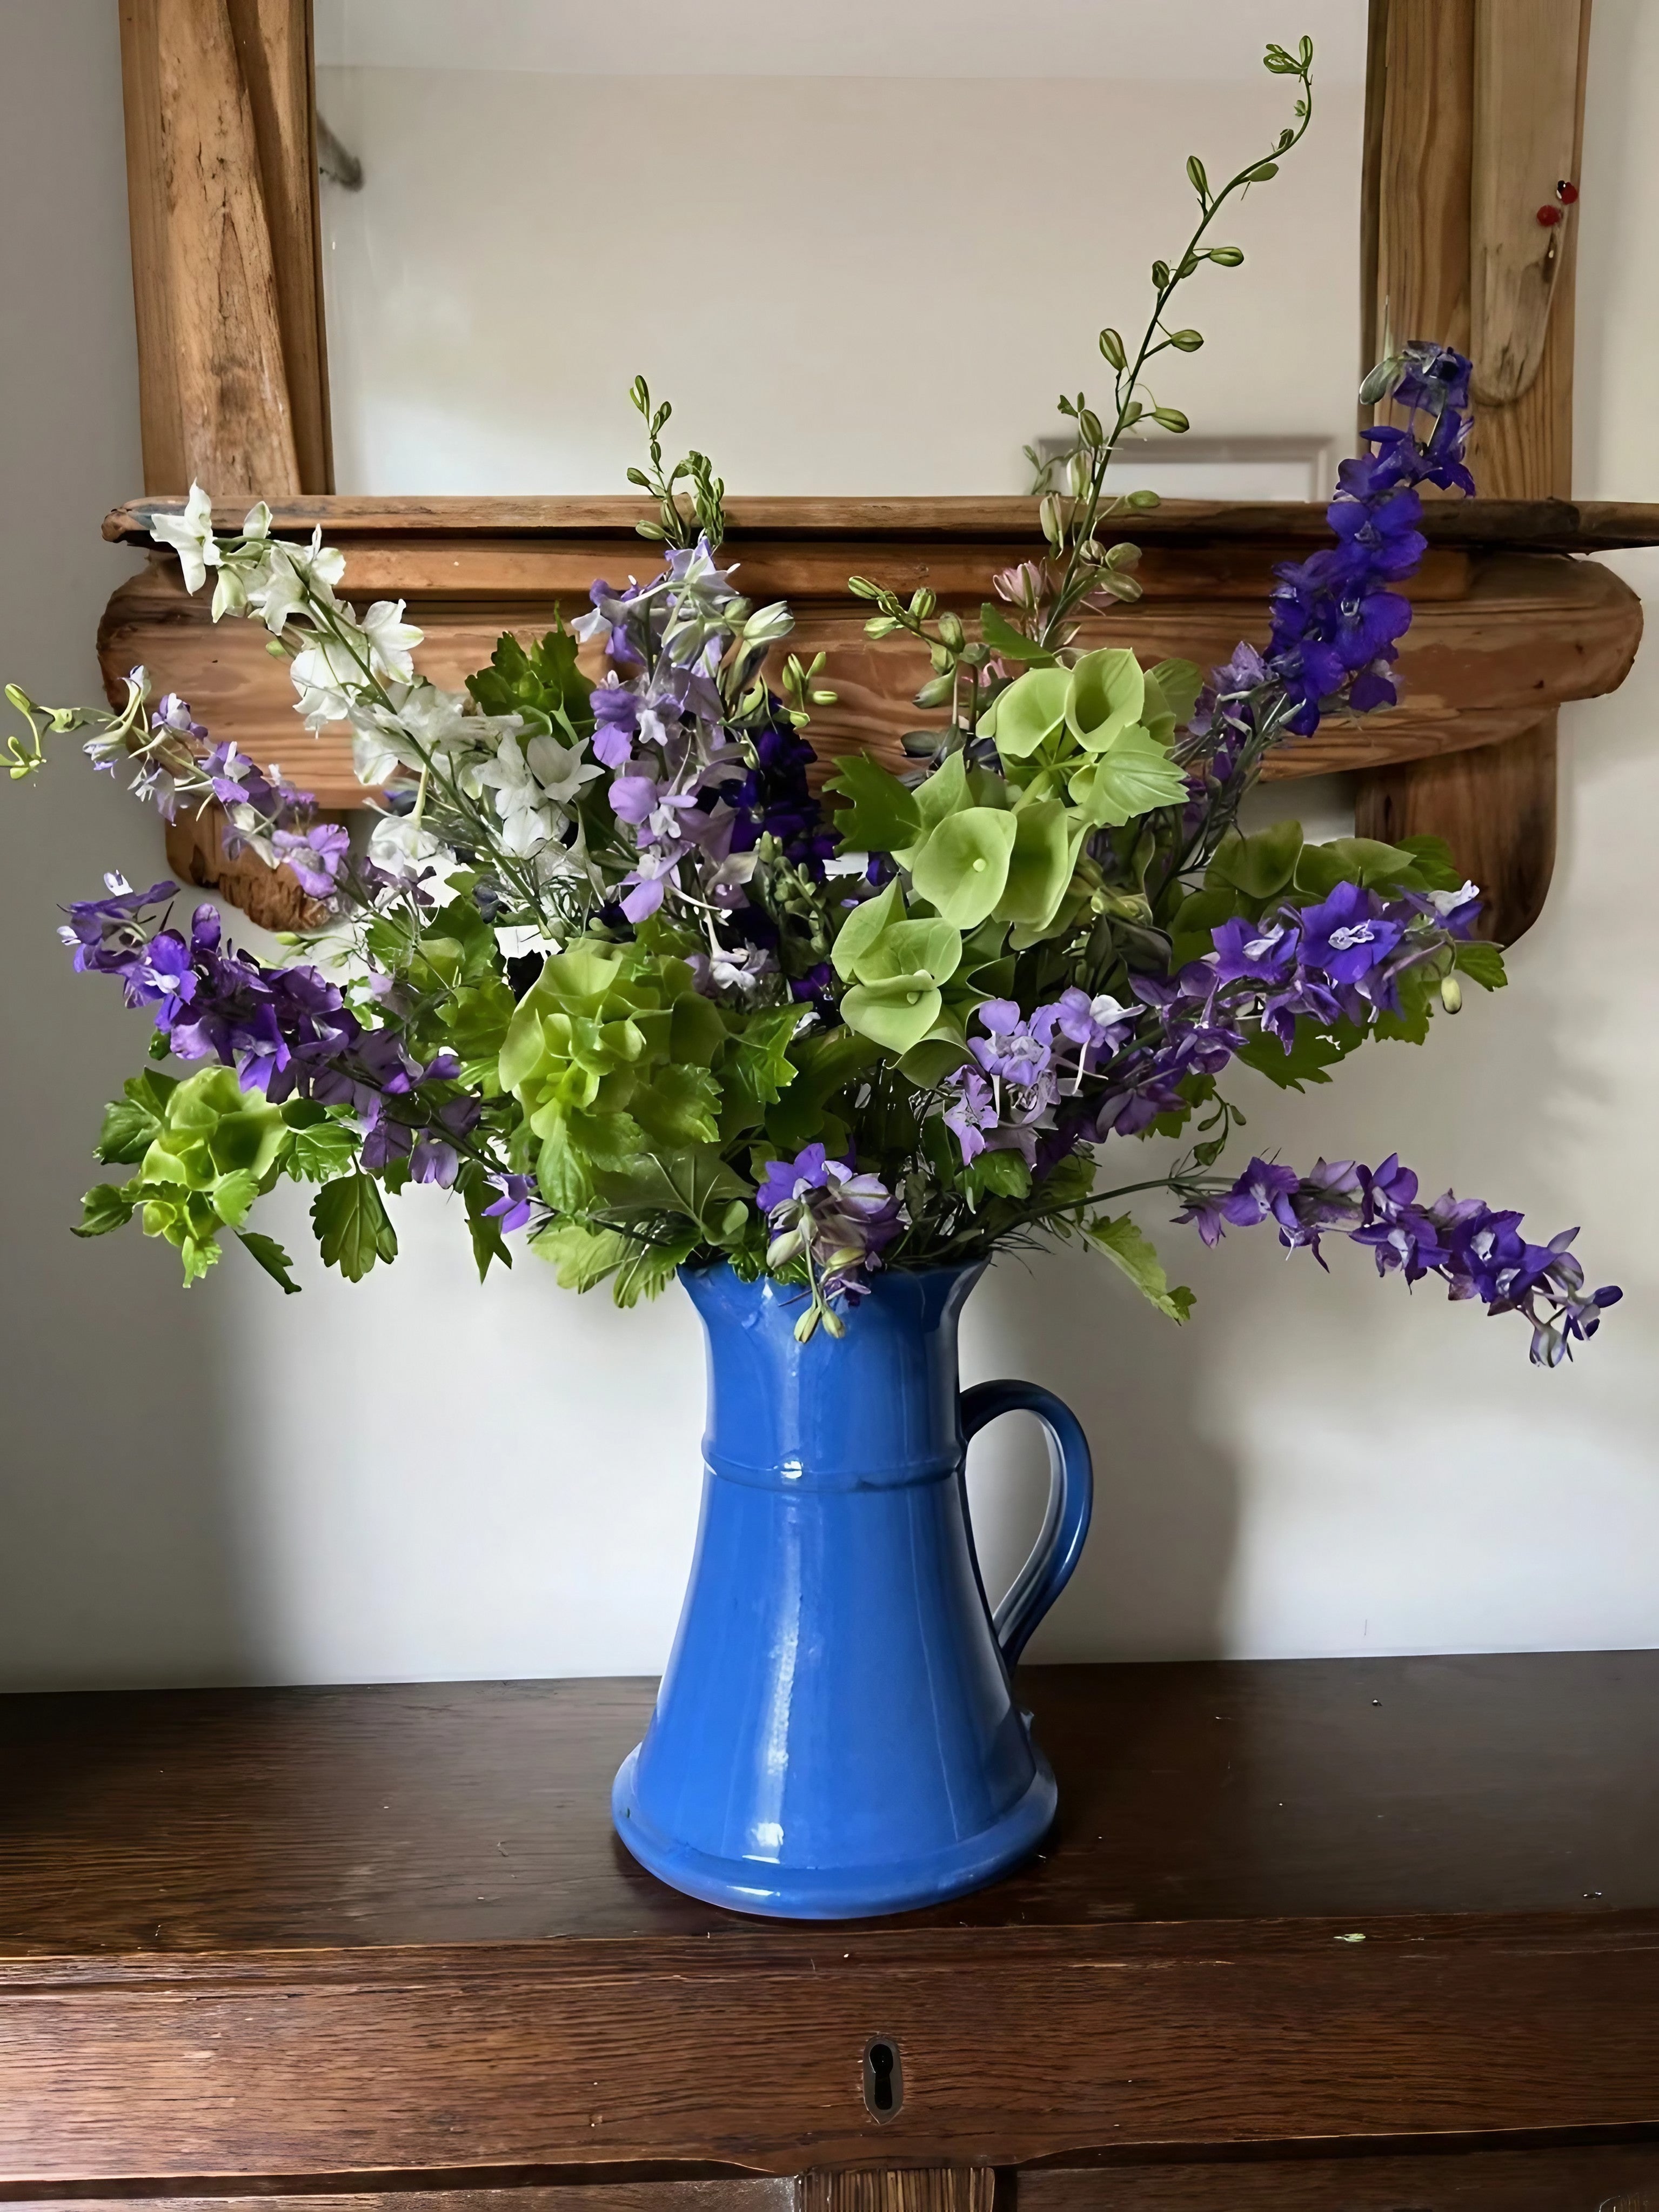 Blue vase showcasing a fresh arrangement of Bells of Ireland flowers